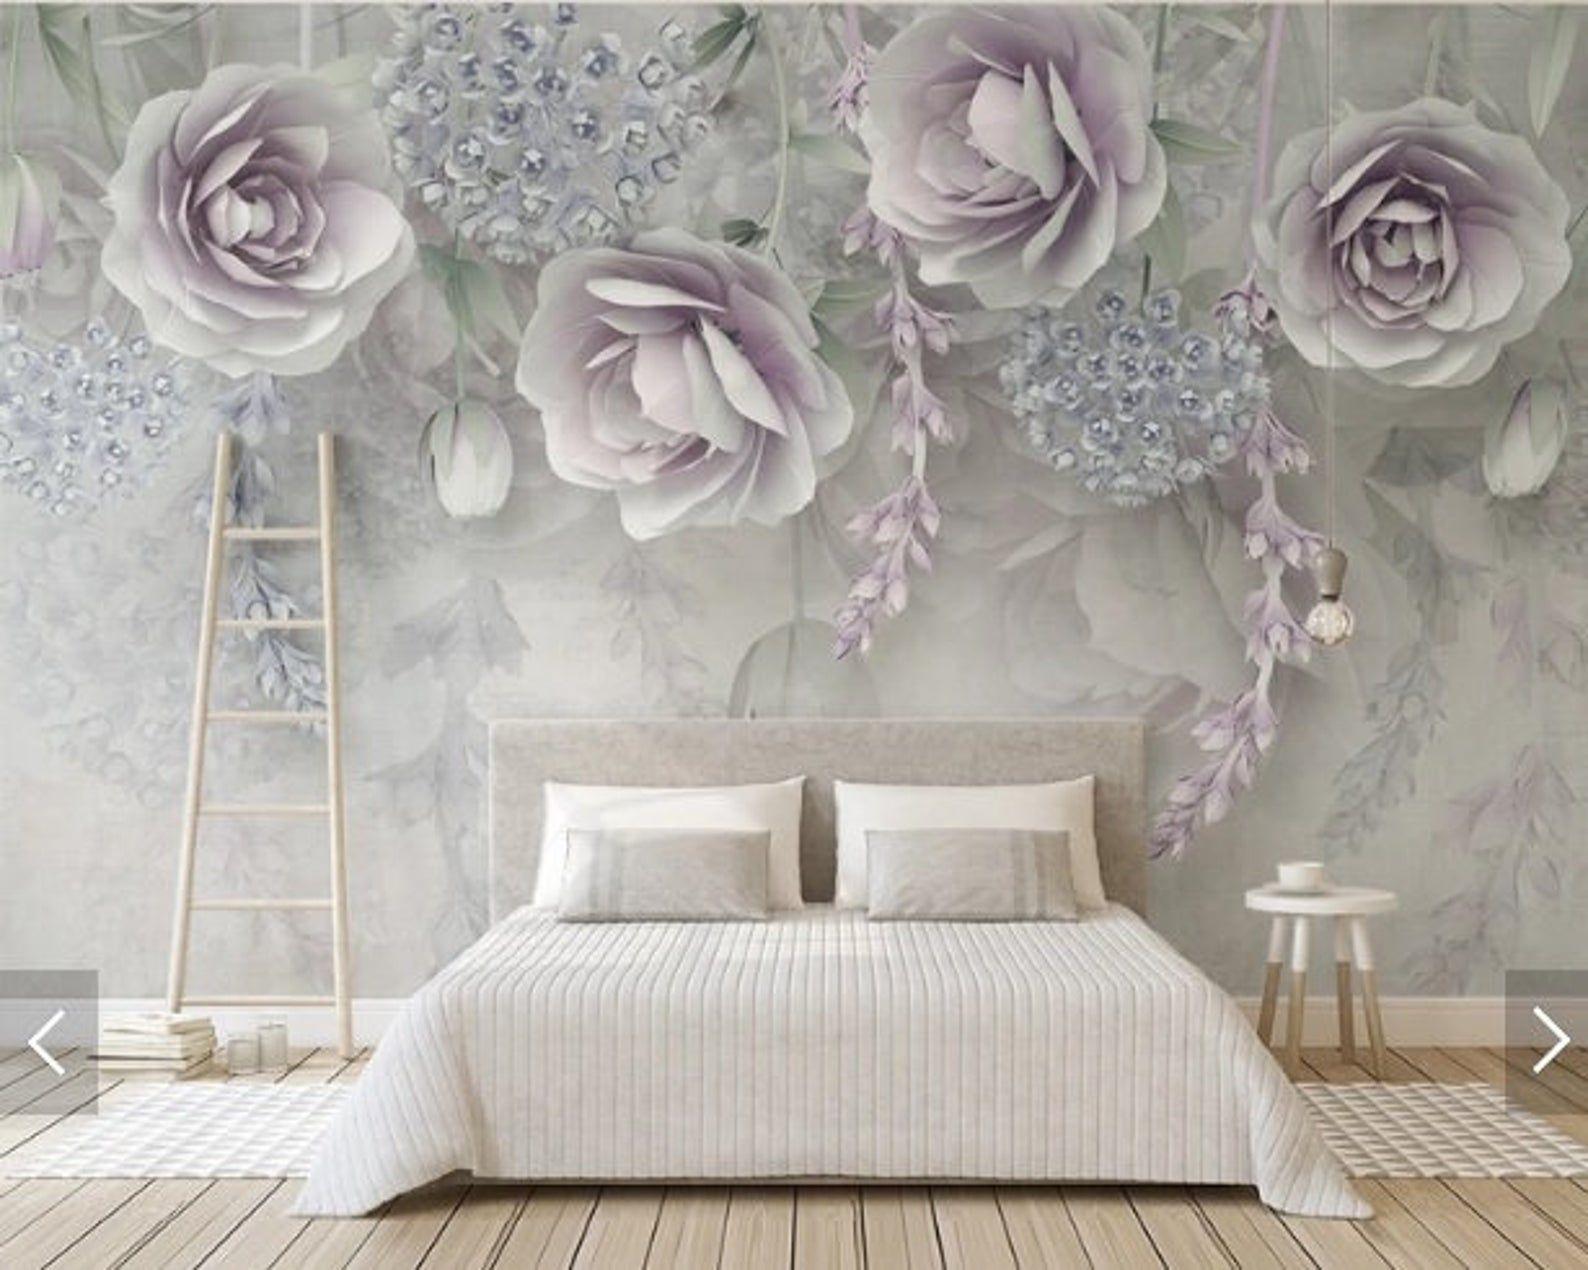 1588 x 1270 · jpeg - Wall mural flowers wallpaper mural wallpaper for bedroom | Etsy | Room ...